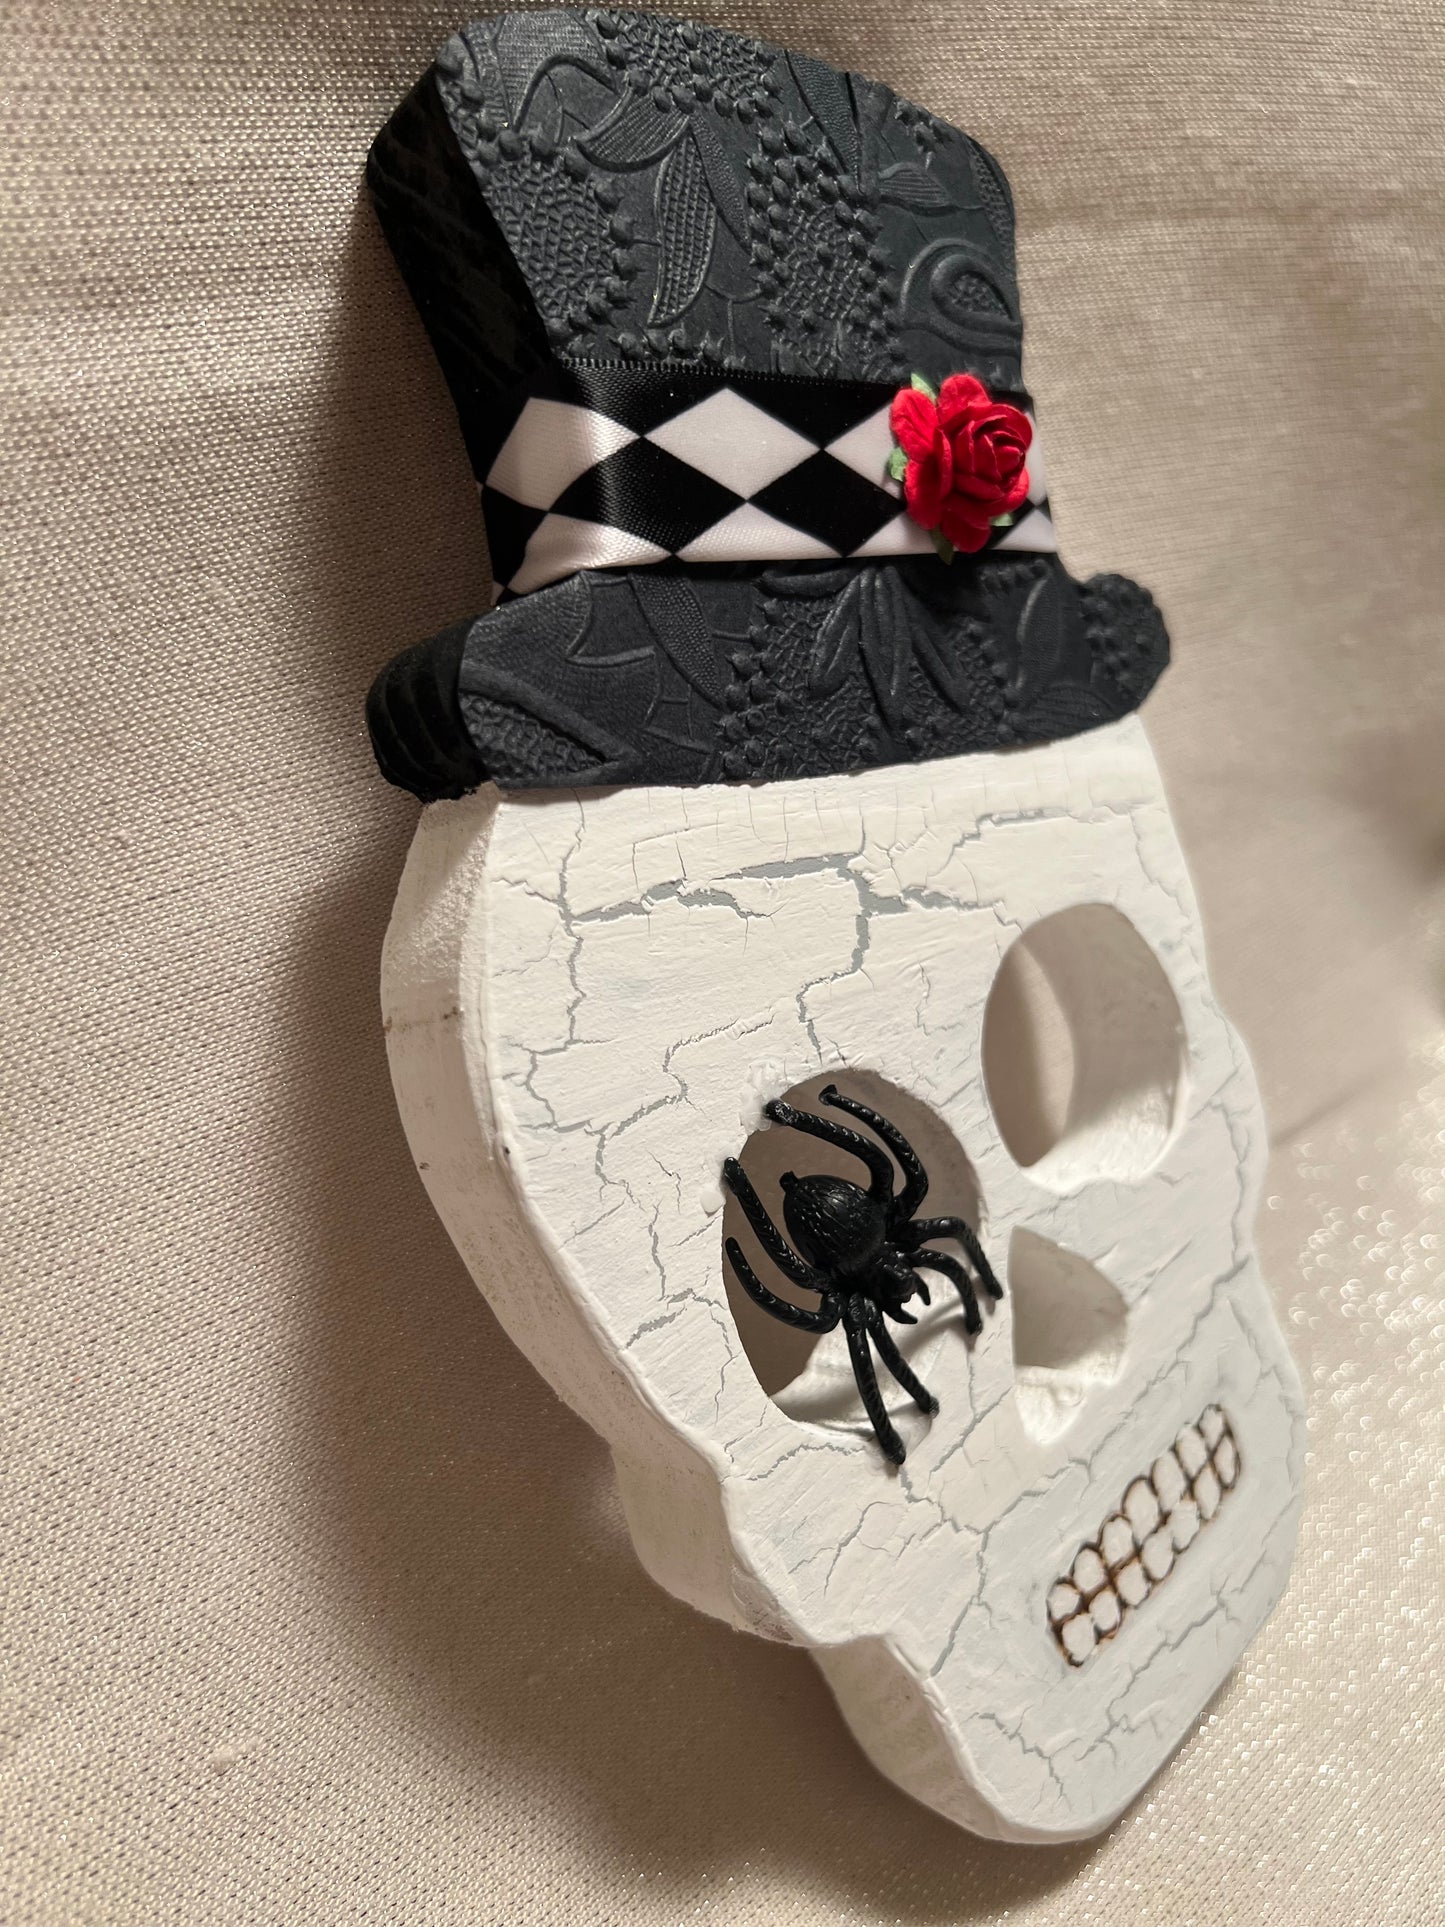 Halloween Skull with Top Hat